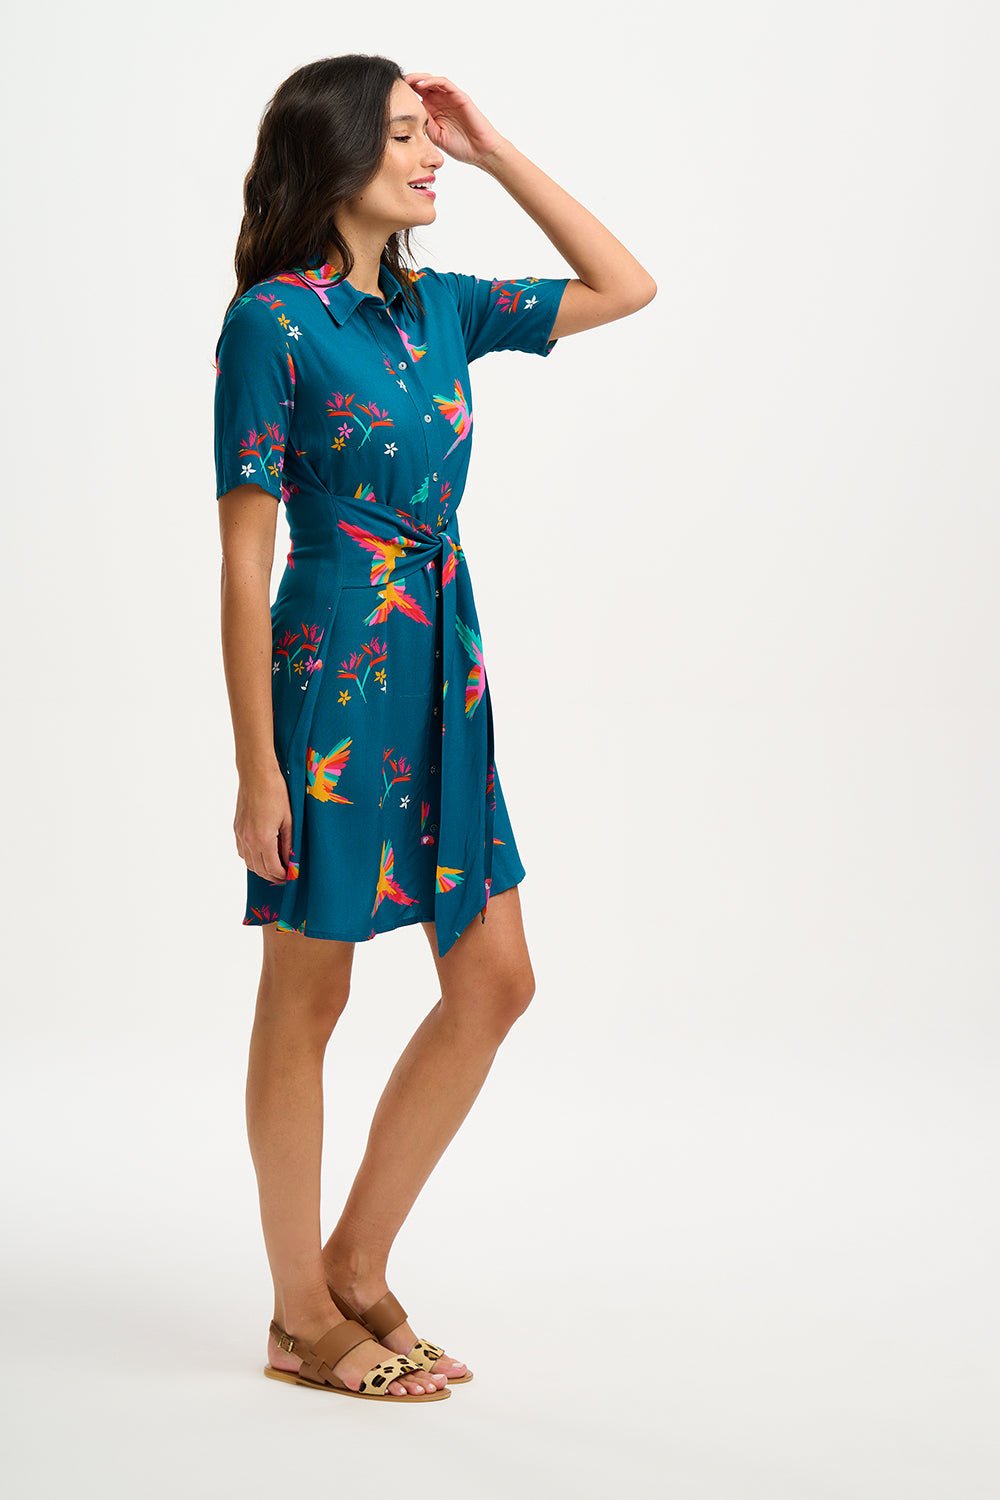 Dessie Shirt Dress - Rainbow Parrots - Rockamilly-Dresses-Vintage